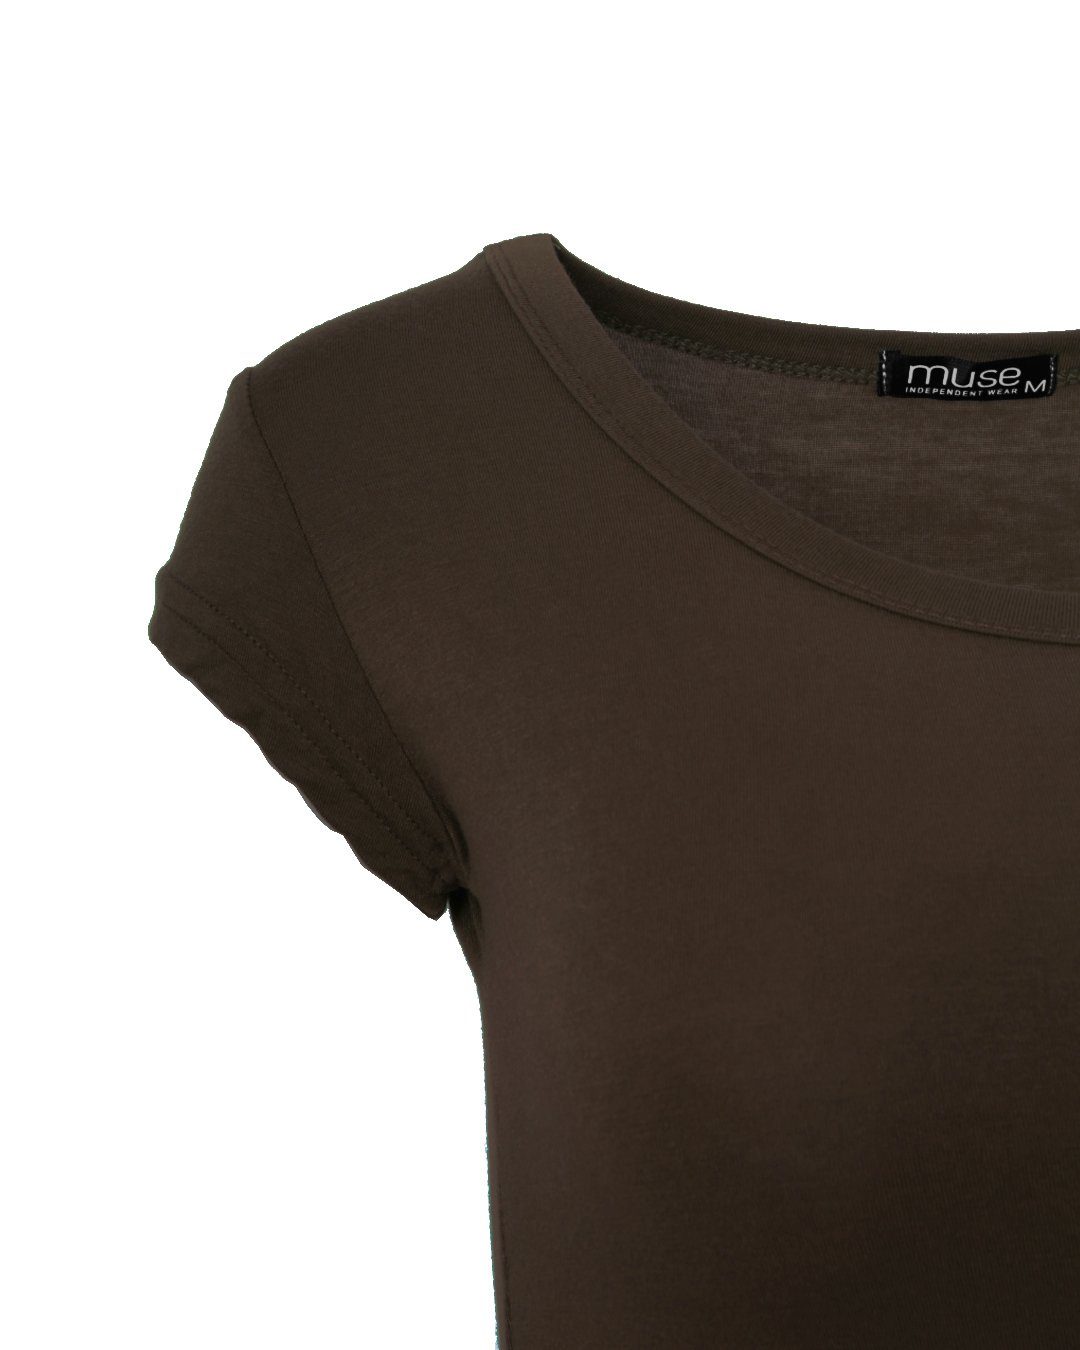 Muse T-Shirt Skinny Basic dunkelbraun Fit T-Shirt 1001 Kurzarm